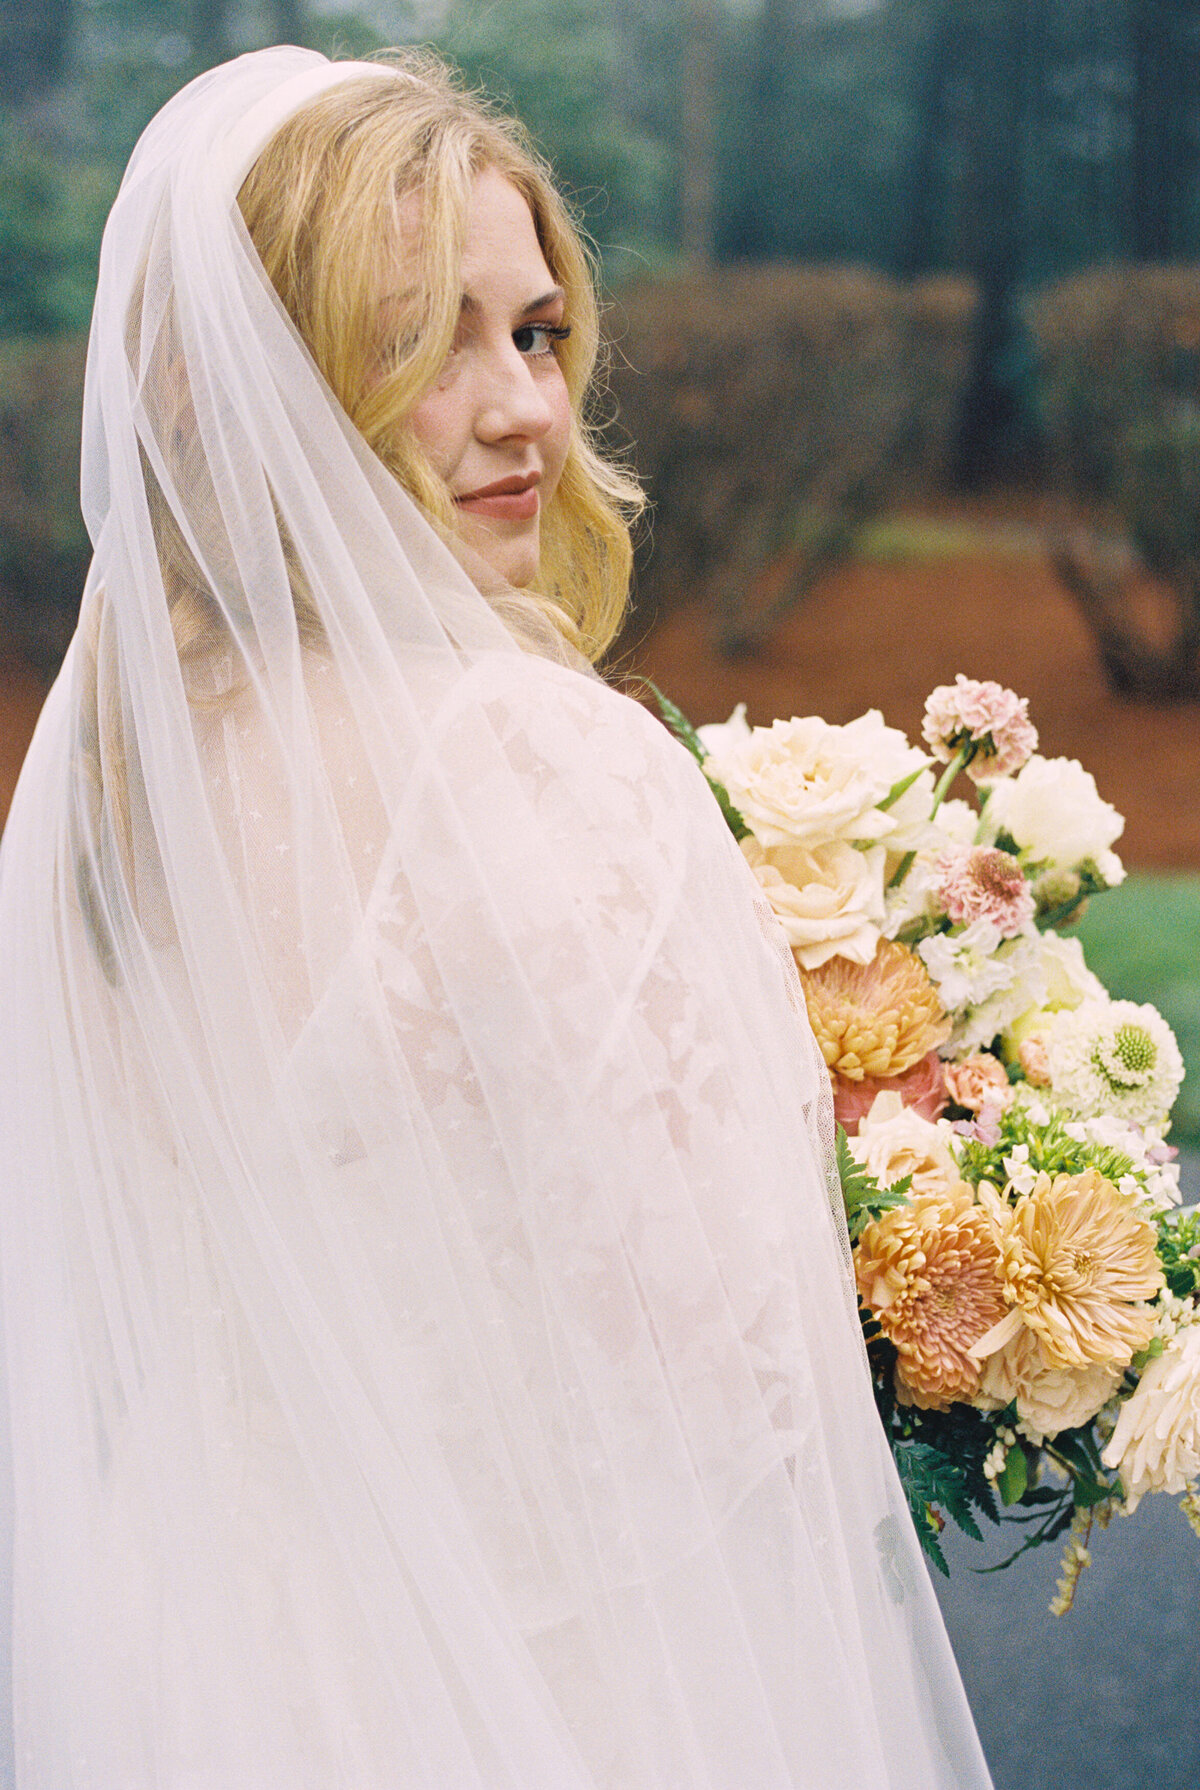 Bride wearing a veil and holding her wedding bouquet glances over her shoulder